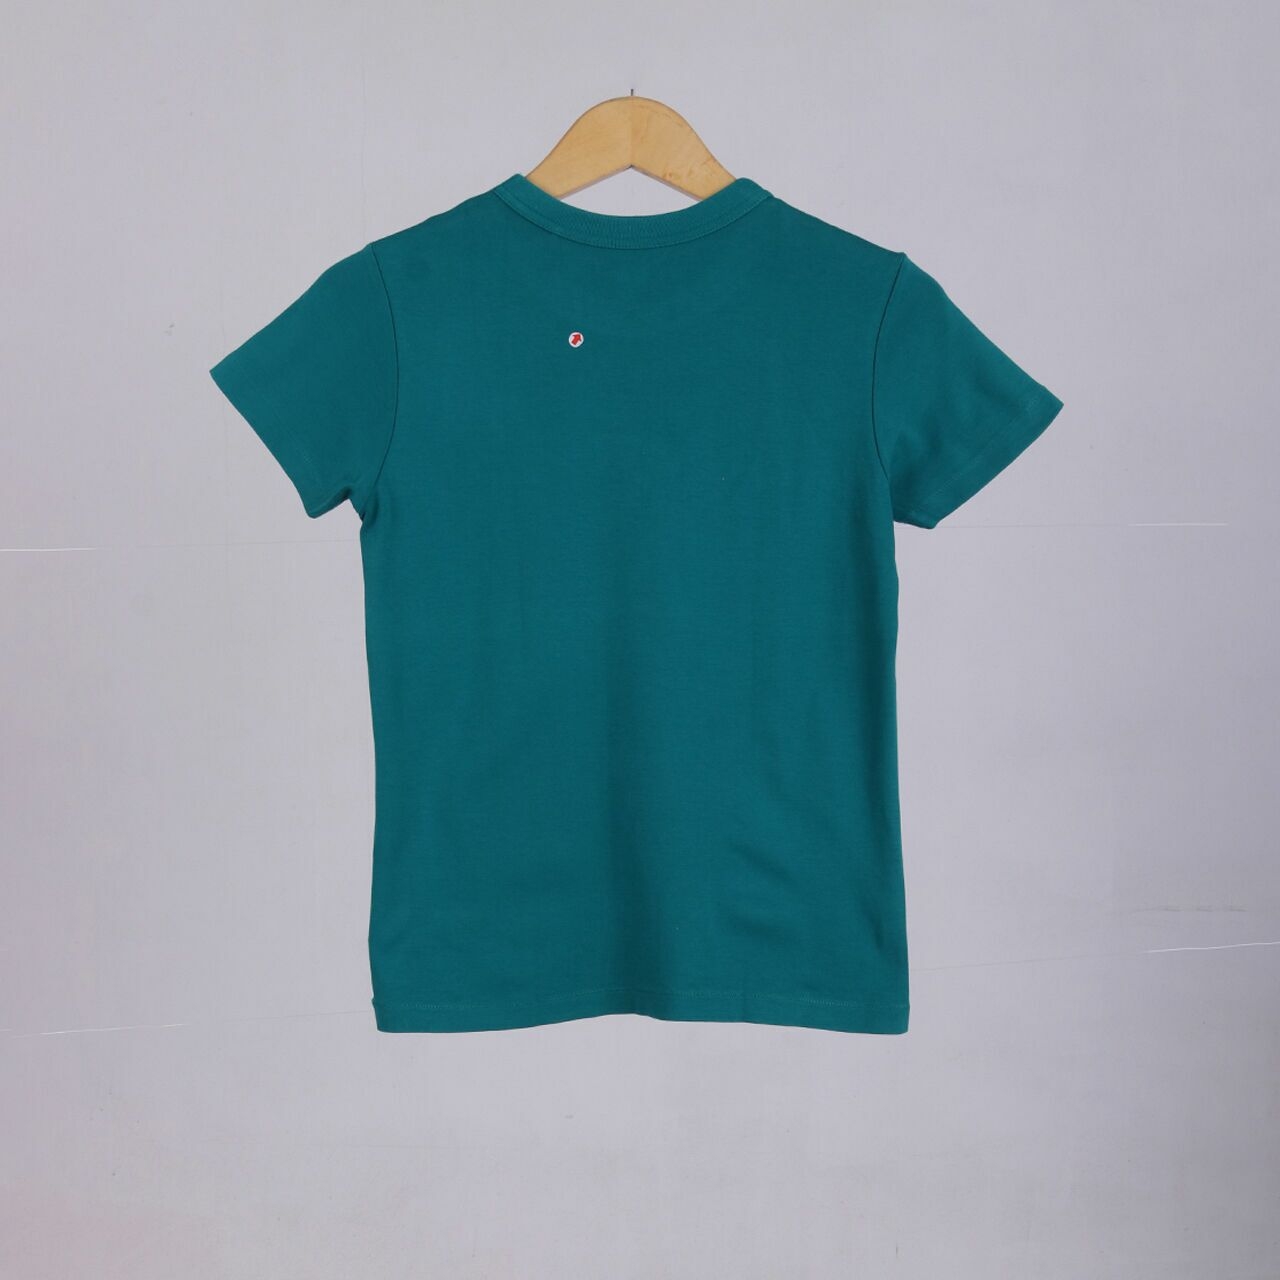 UNIQLO Teal Green Tshirt